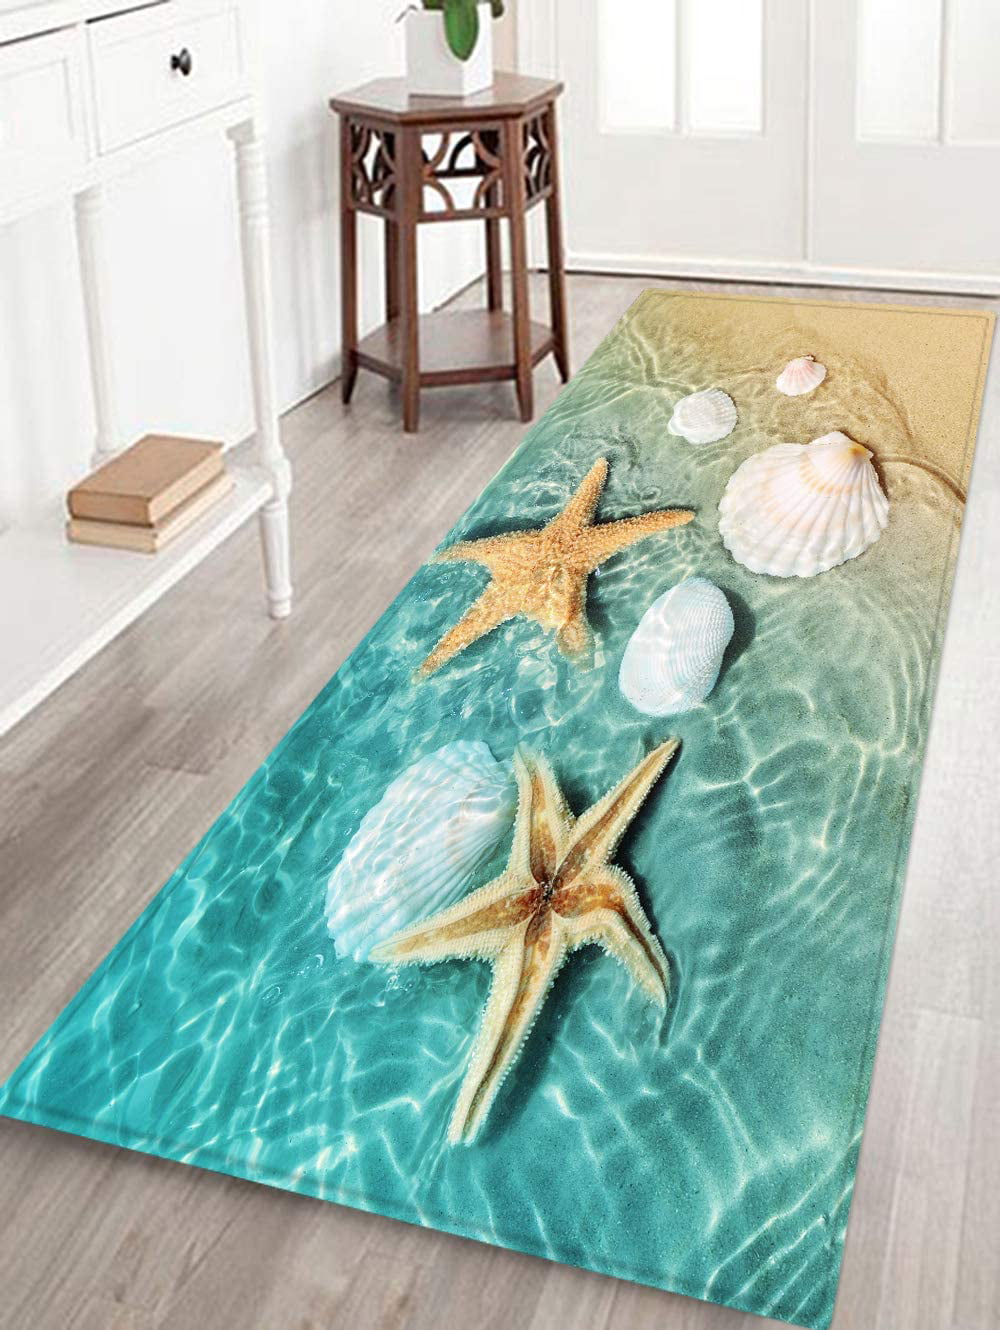 Starfish Beach Sea Water Print Memory Foam Bath Rugs and Doormats Non Slip Absorbent Super Cozy Flannel Bathroom Rug Carpet 4 x 5.2 Foot